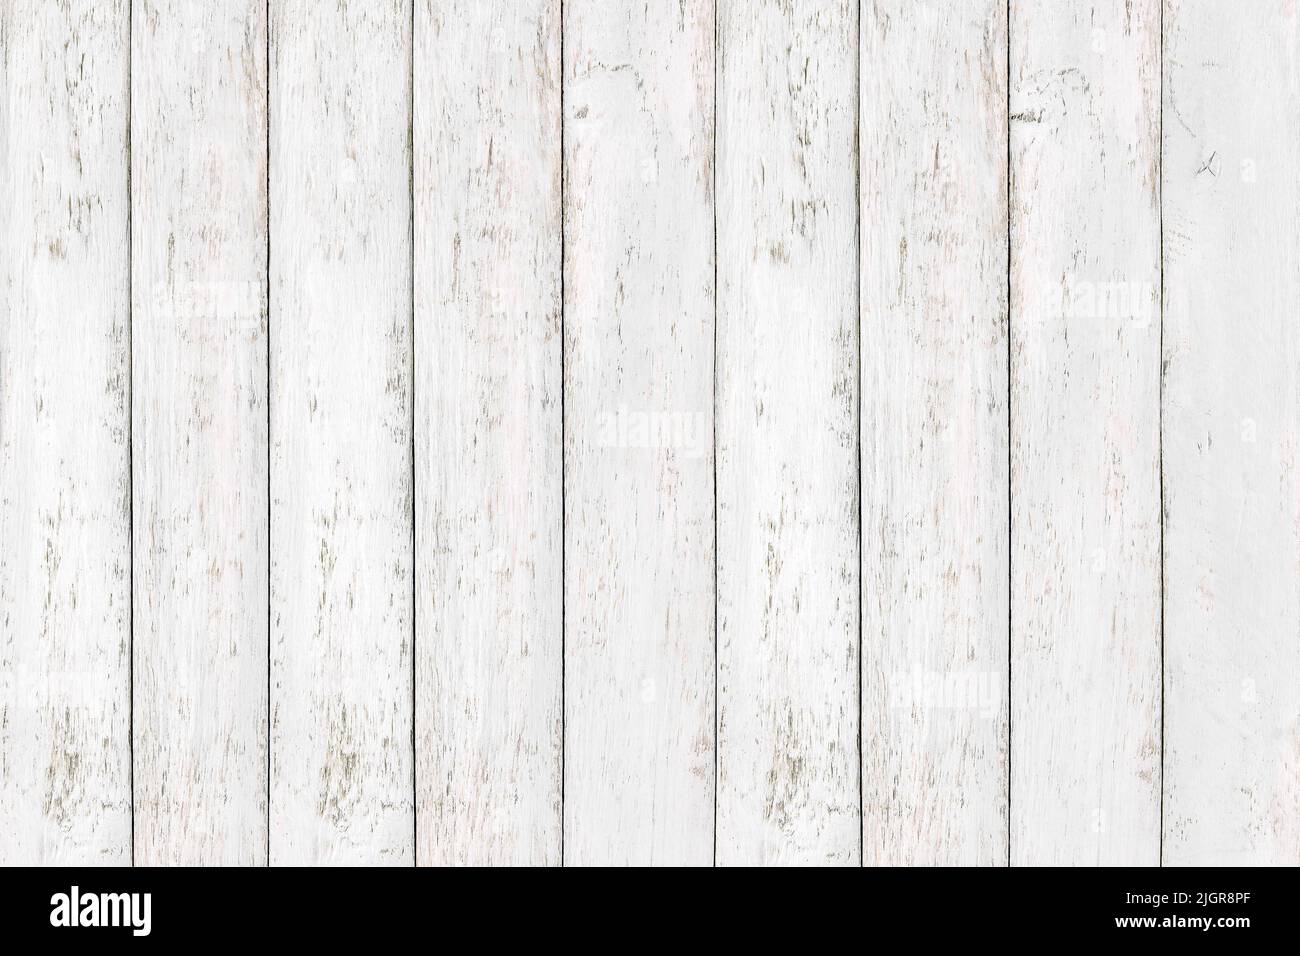 White washed wood texture. Wooden farmhouse background Stock Photo - Alamy